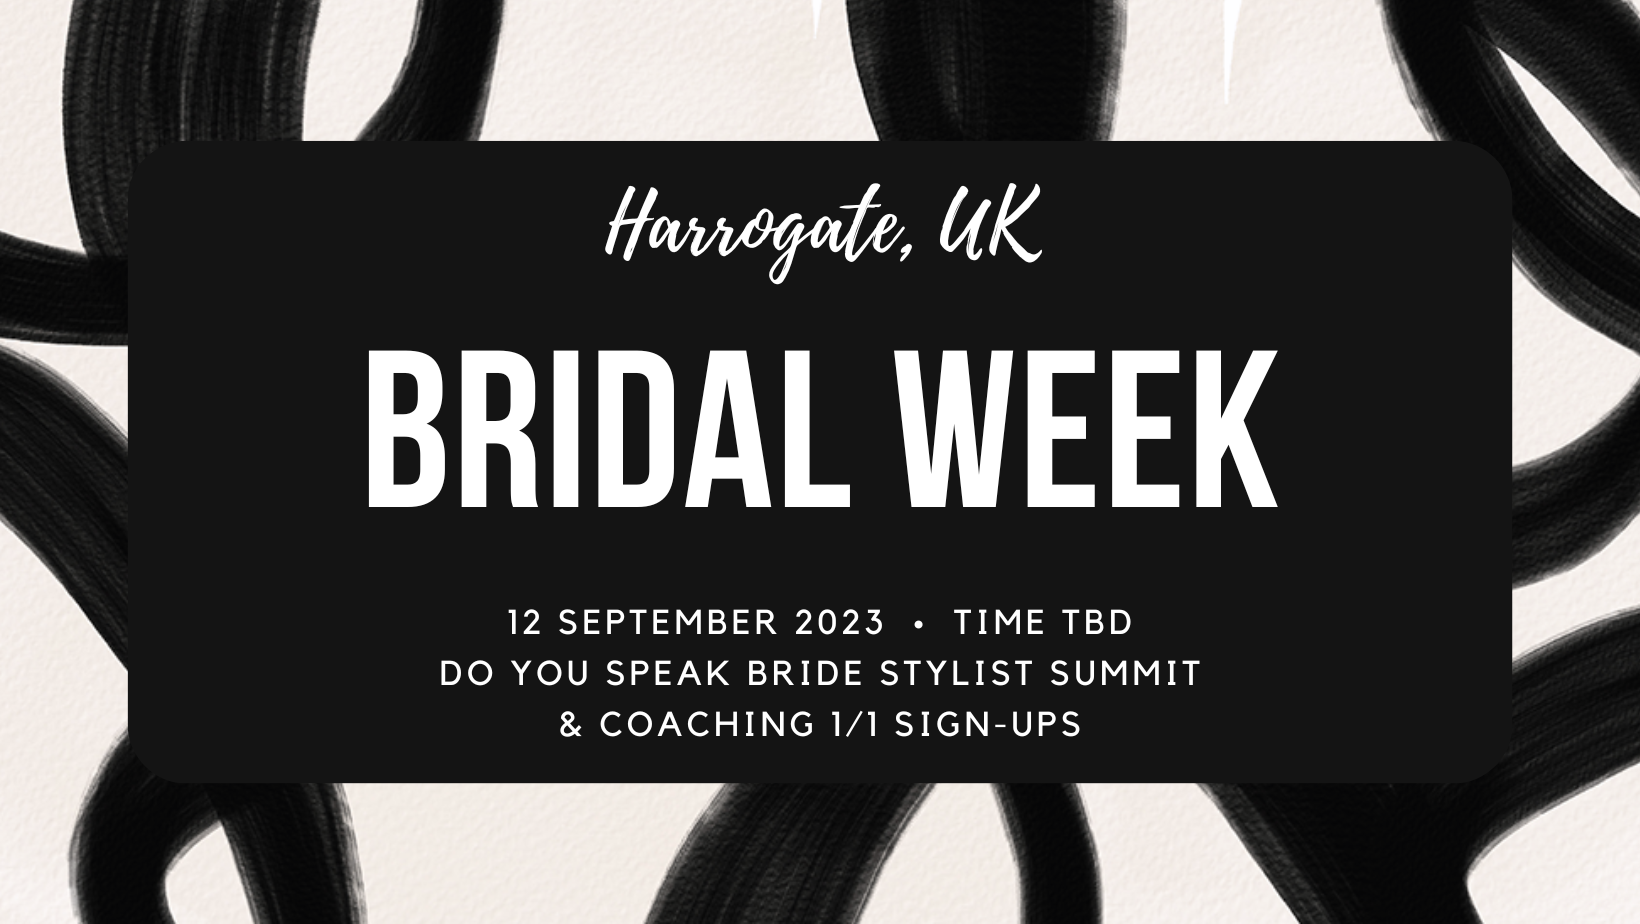 do you speak bride signature stylist summit harrogate uk bridal week september 2023